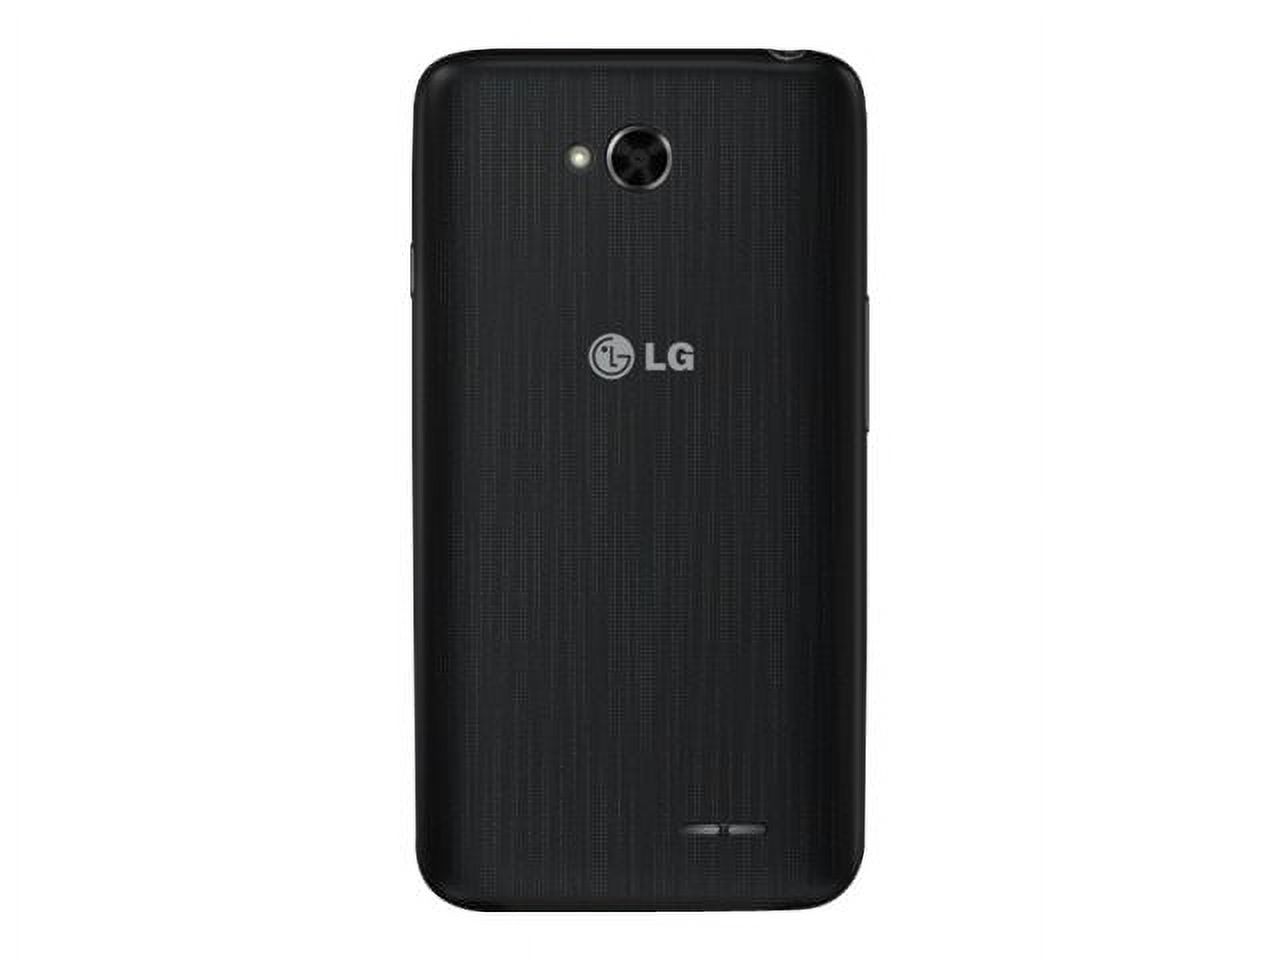 LG REALM - 3G smartphone - RAM 1 GB / Internal Memory 4 GB - microSD slot - 4.5" - 800 x 480 pixels - rear camera 5 MP - Boost - black - image 4 of 7